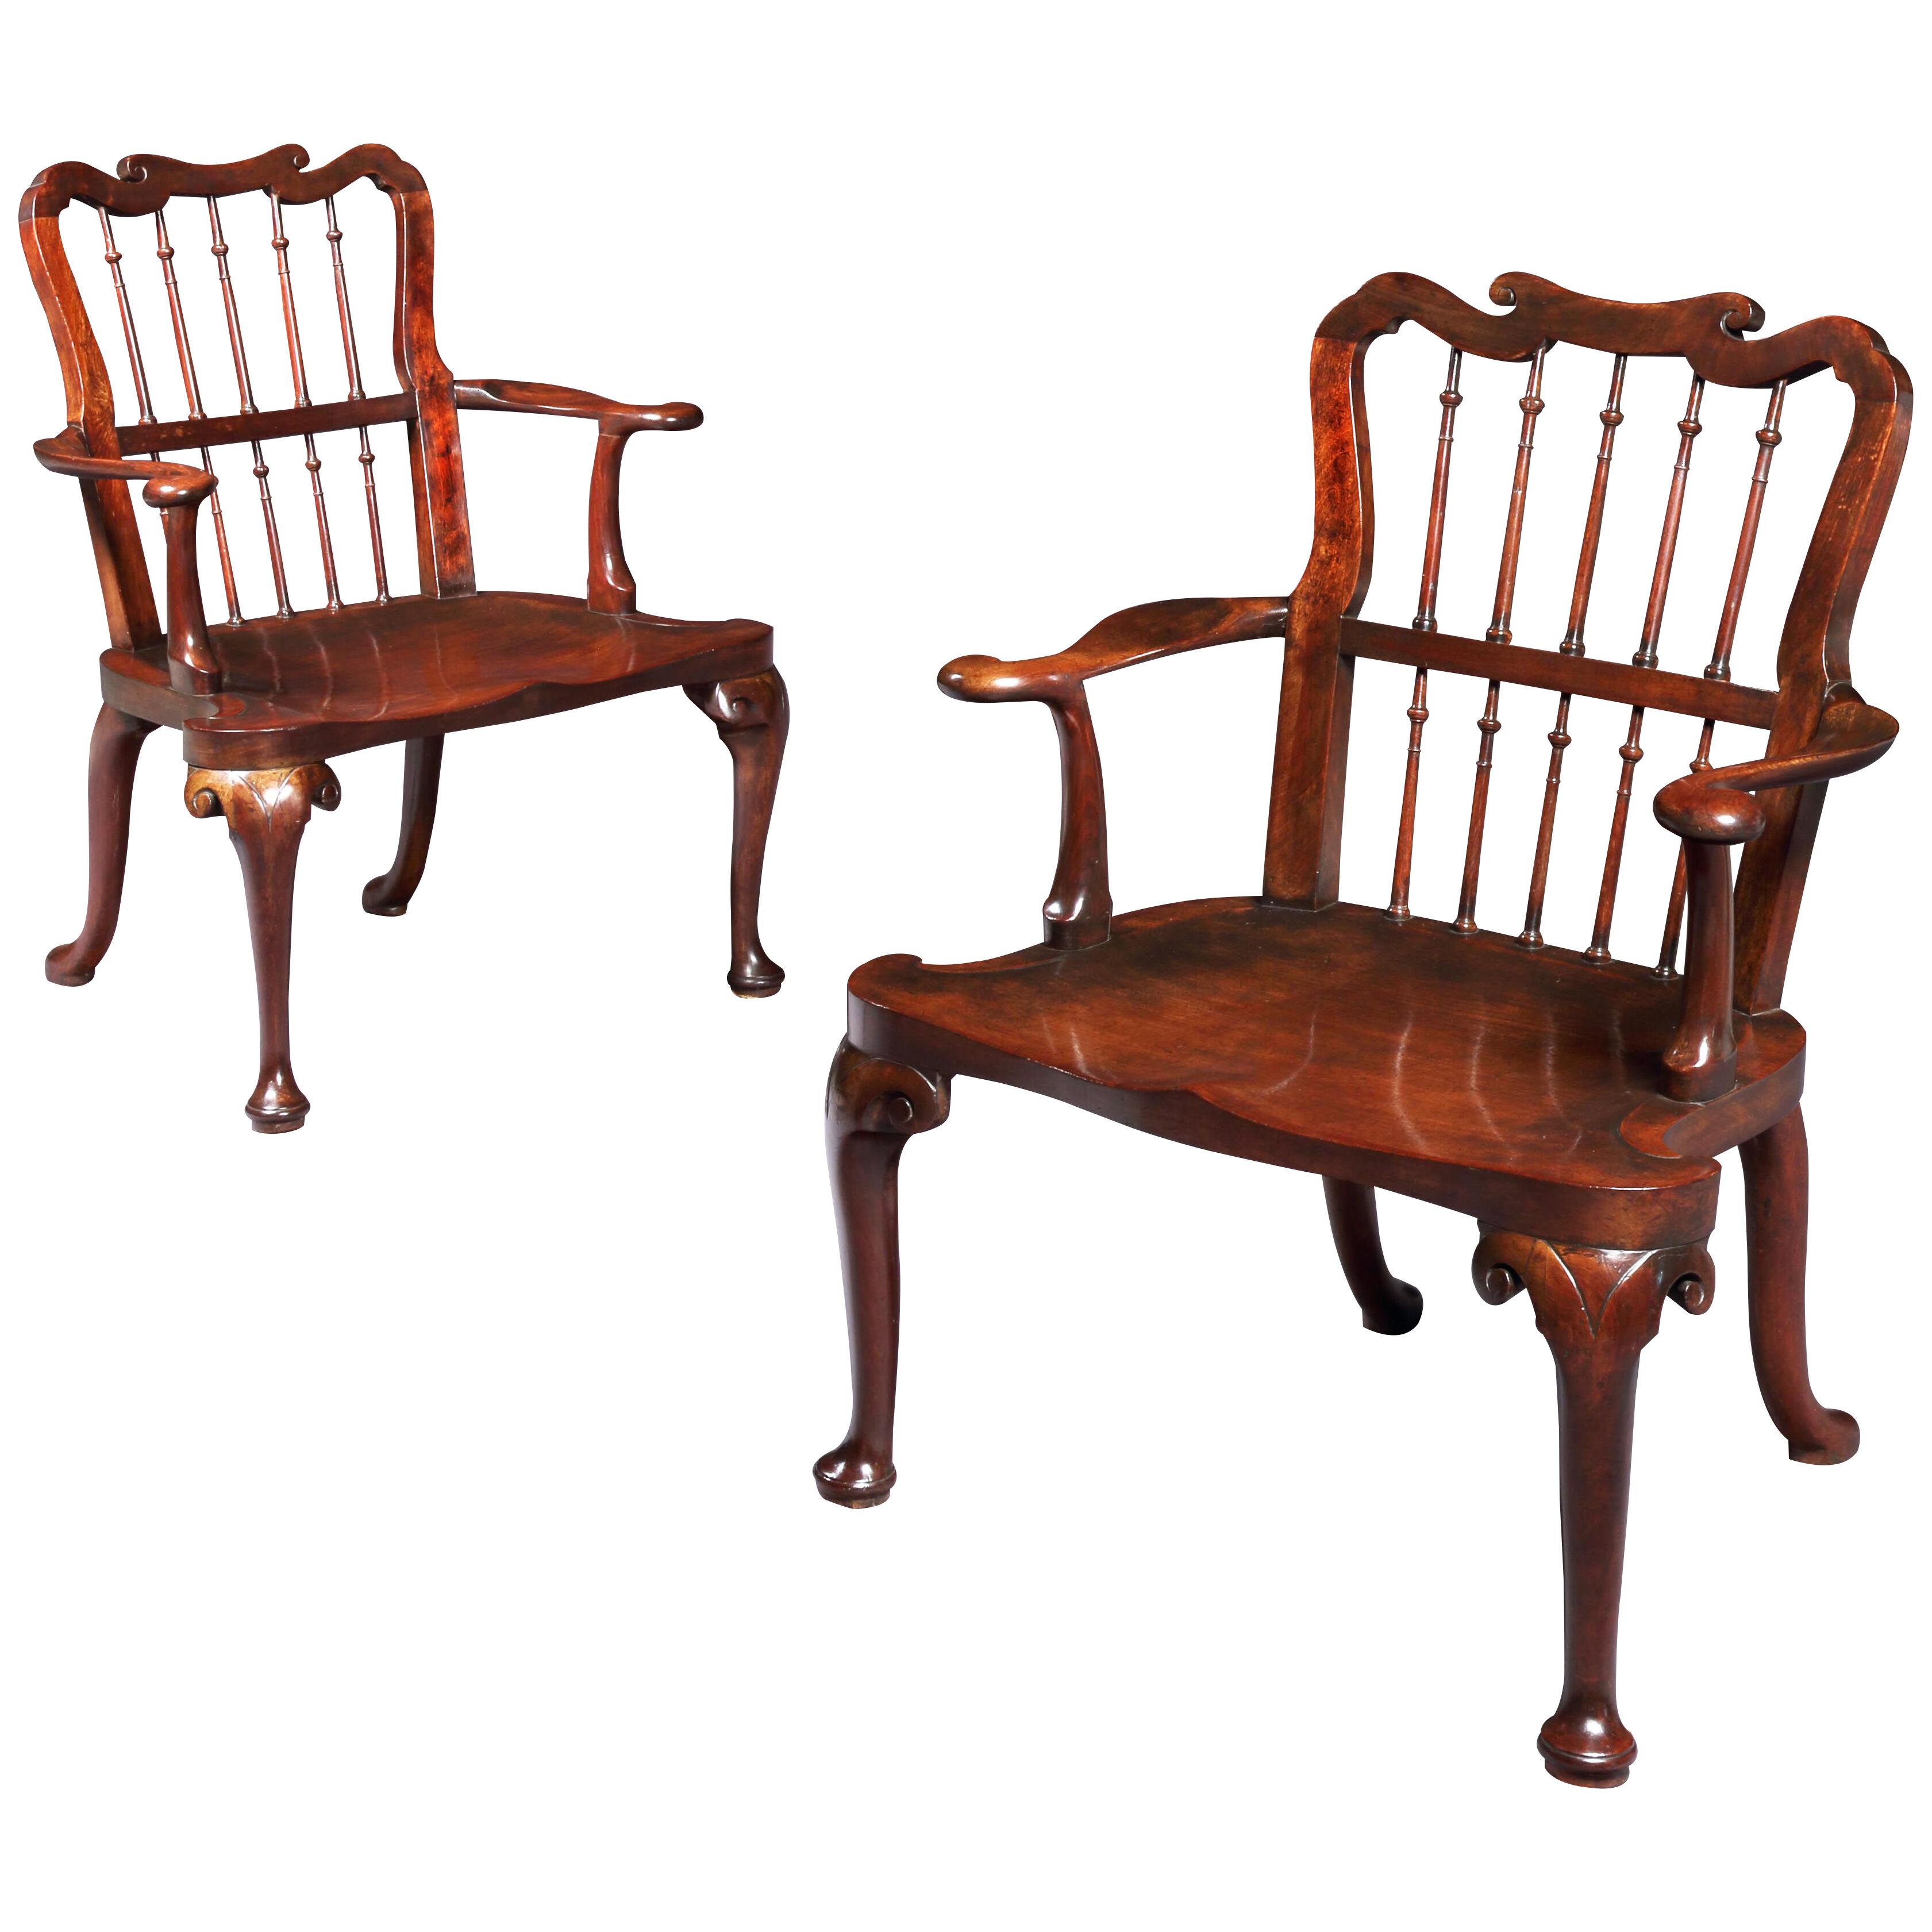 A Pair of George II Mahogany Hall Chairs